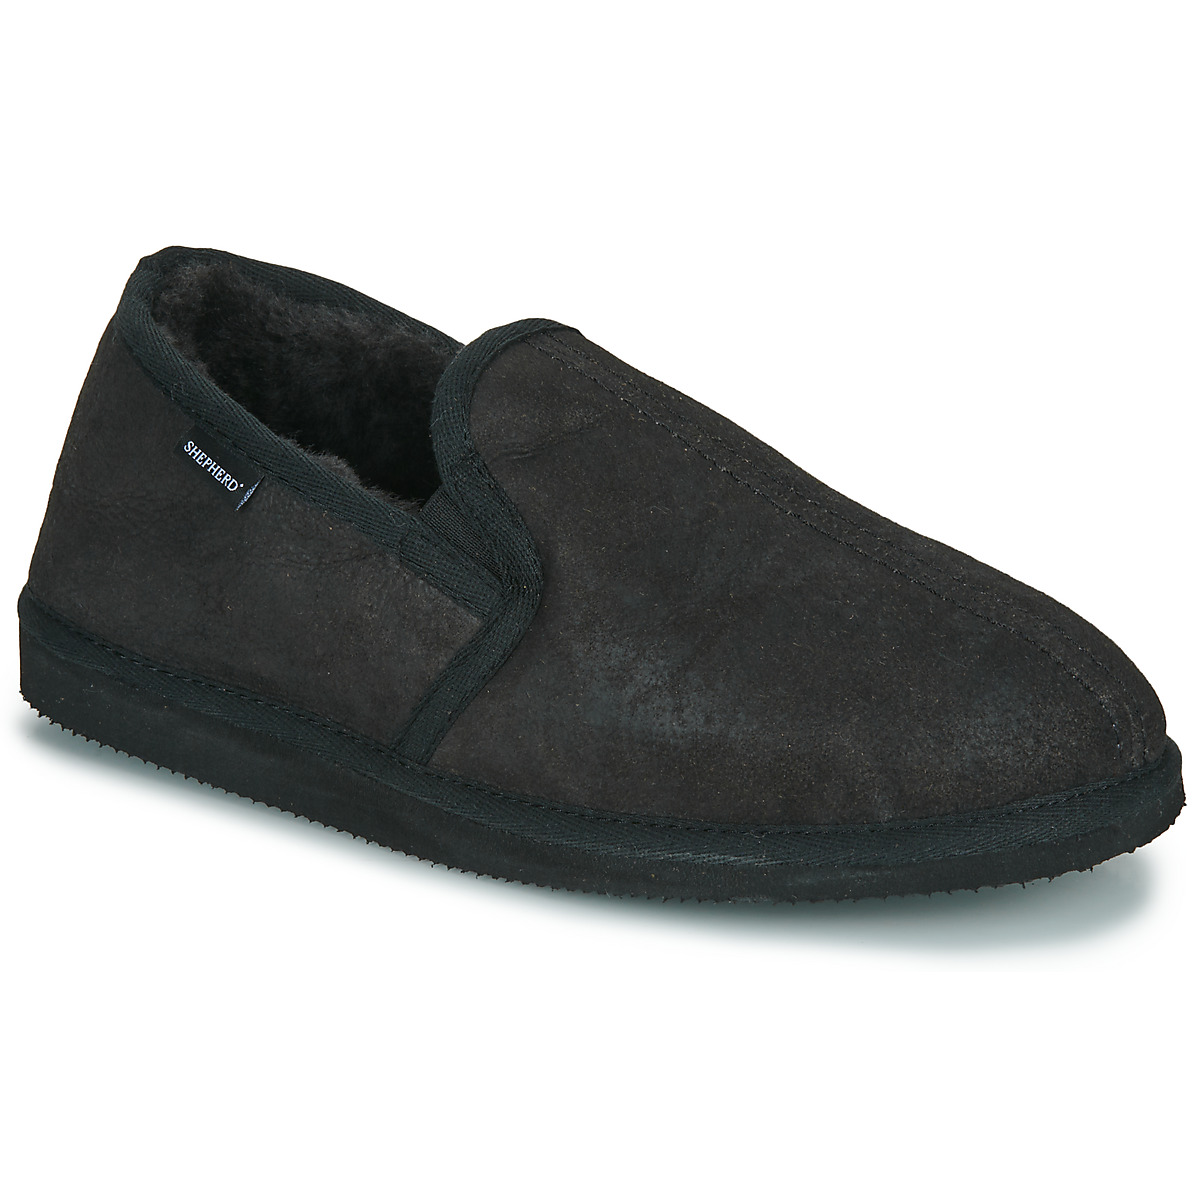 Shoes Men Slippers Shepherd BOSSE Black